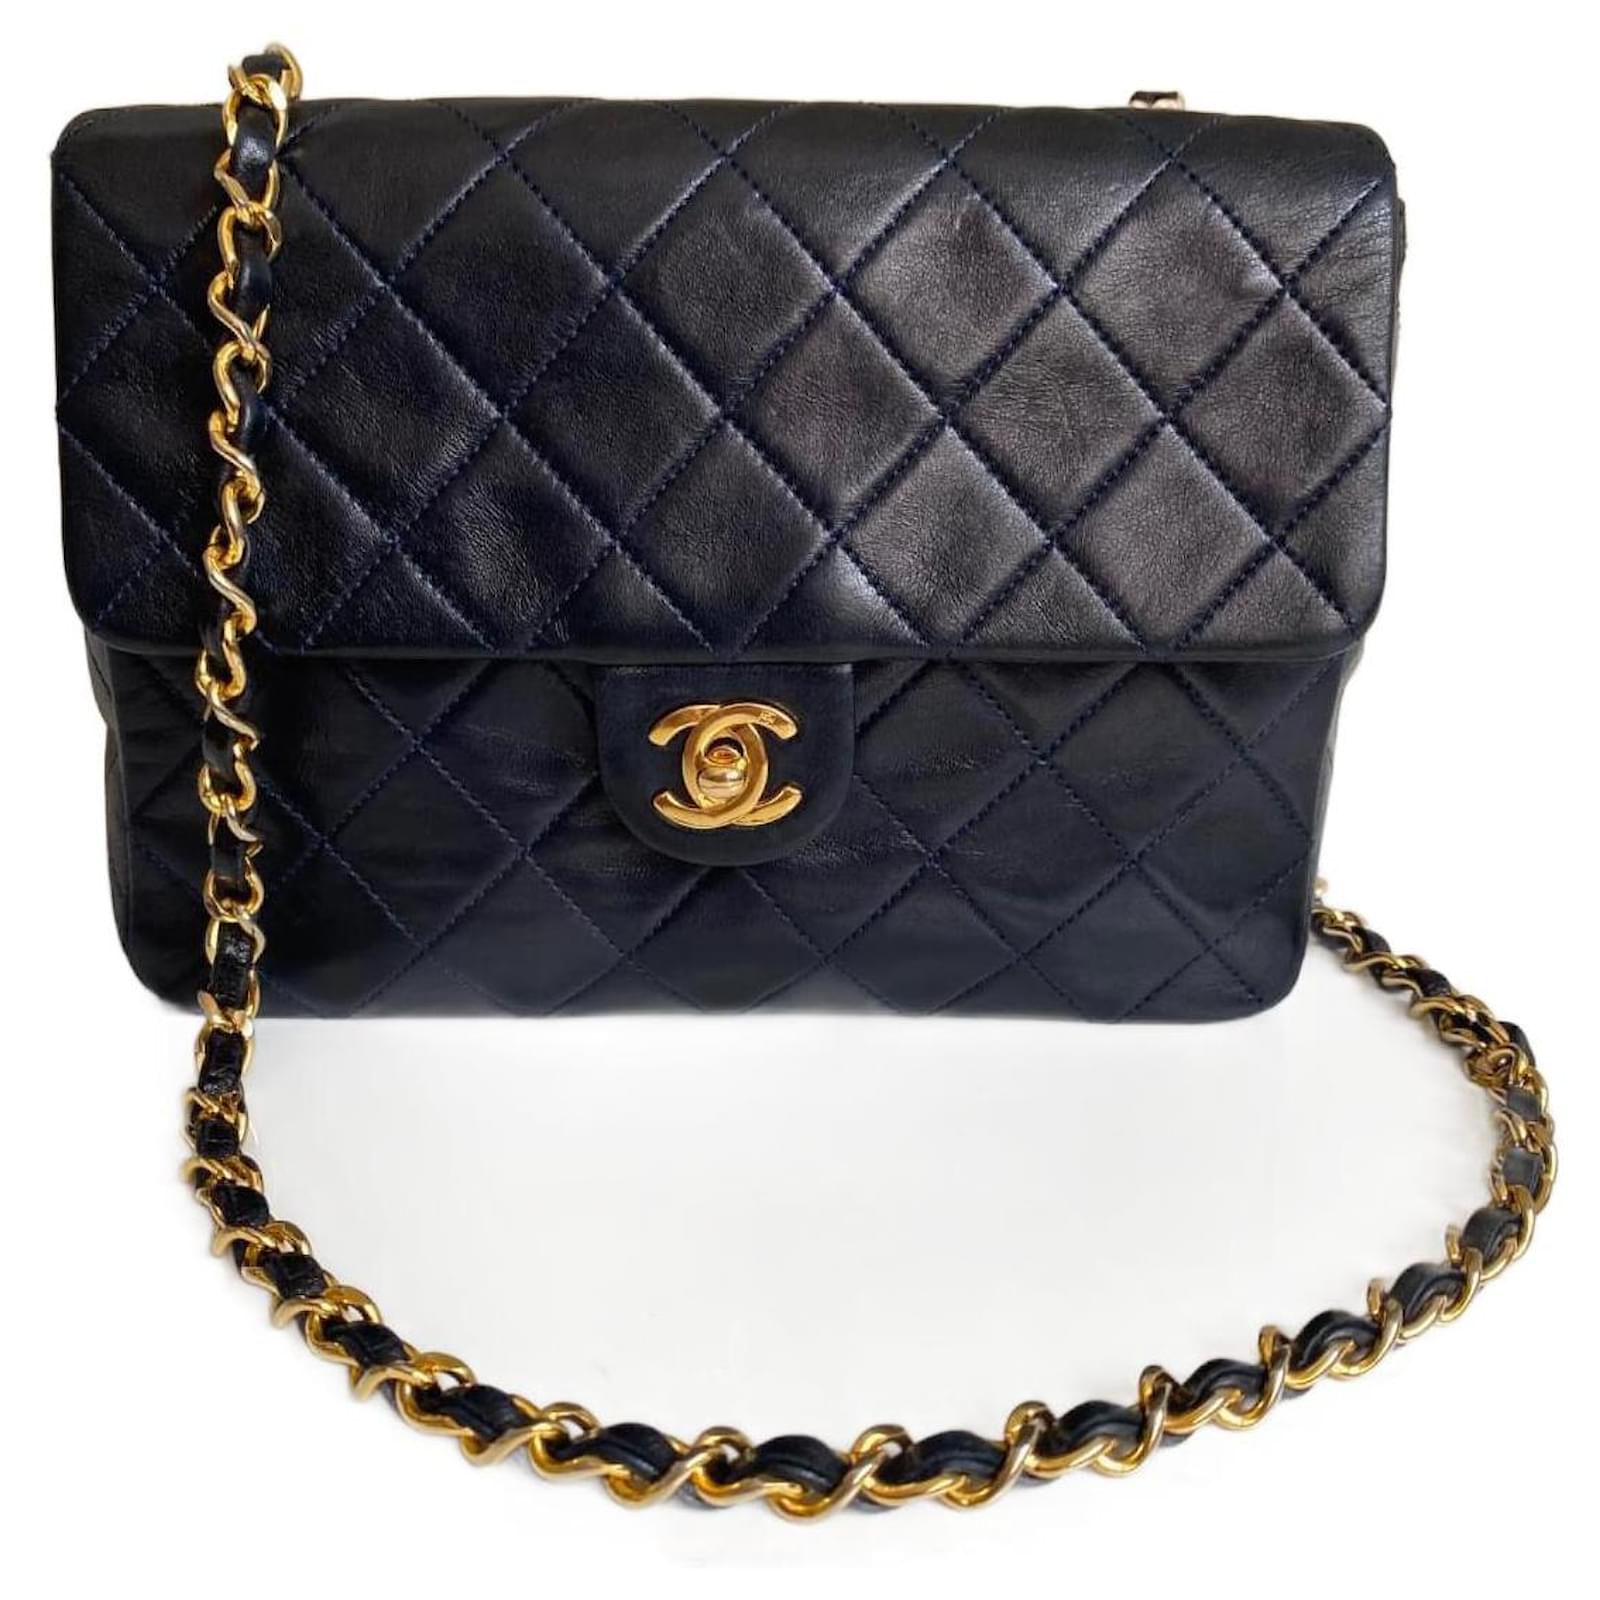 Handbags Chanel TIMELESS/ Classic